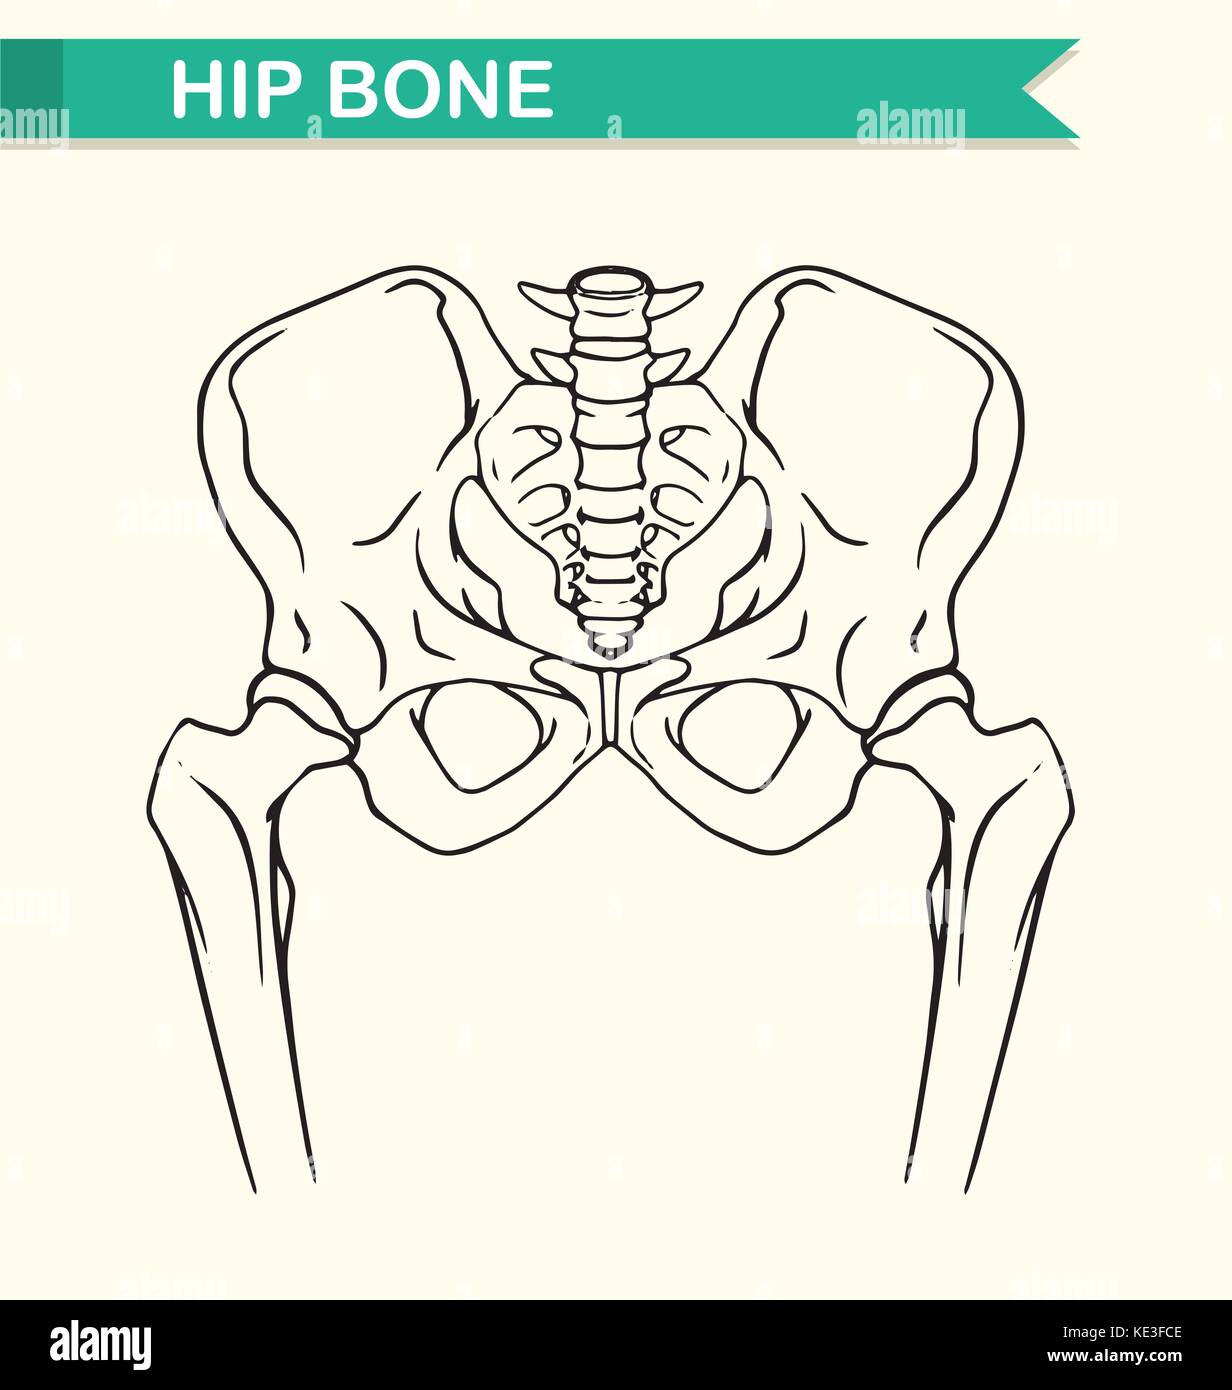 Human Hip Bone On Paper Illustration Stock Vector Image And Art Alamy